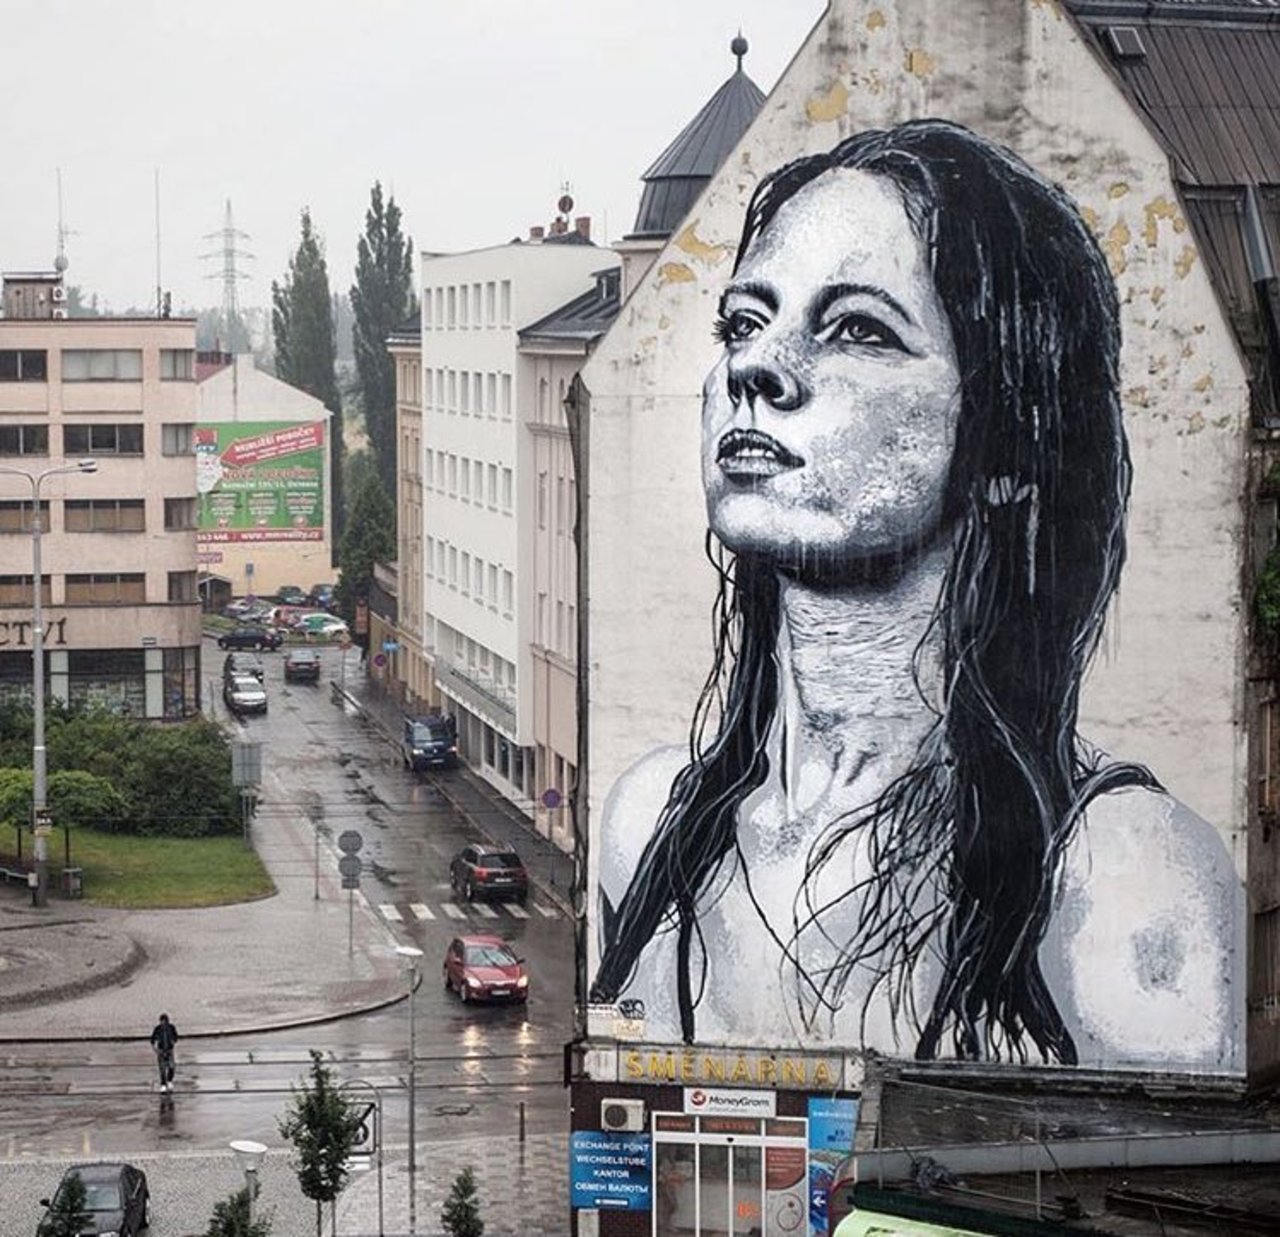 RT GoogleStreetArt: New Street Art by Nils Westergard in Ostrava CZ#art #mural #graffiti #streetart https://t.co/JUDwDSrgeE